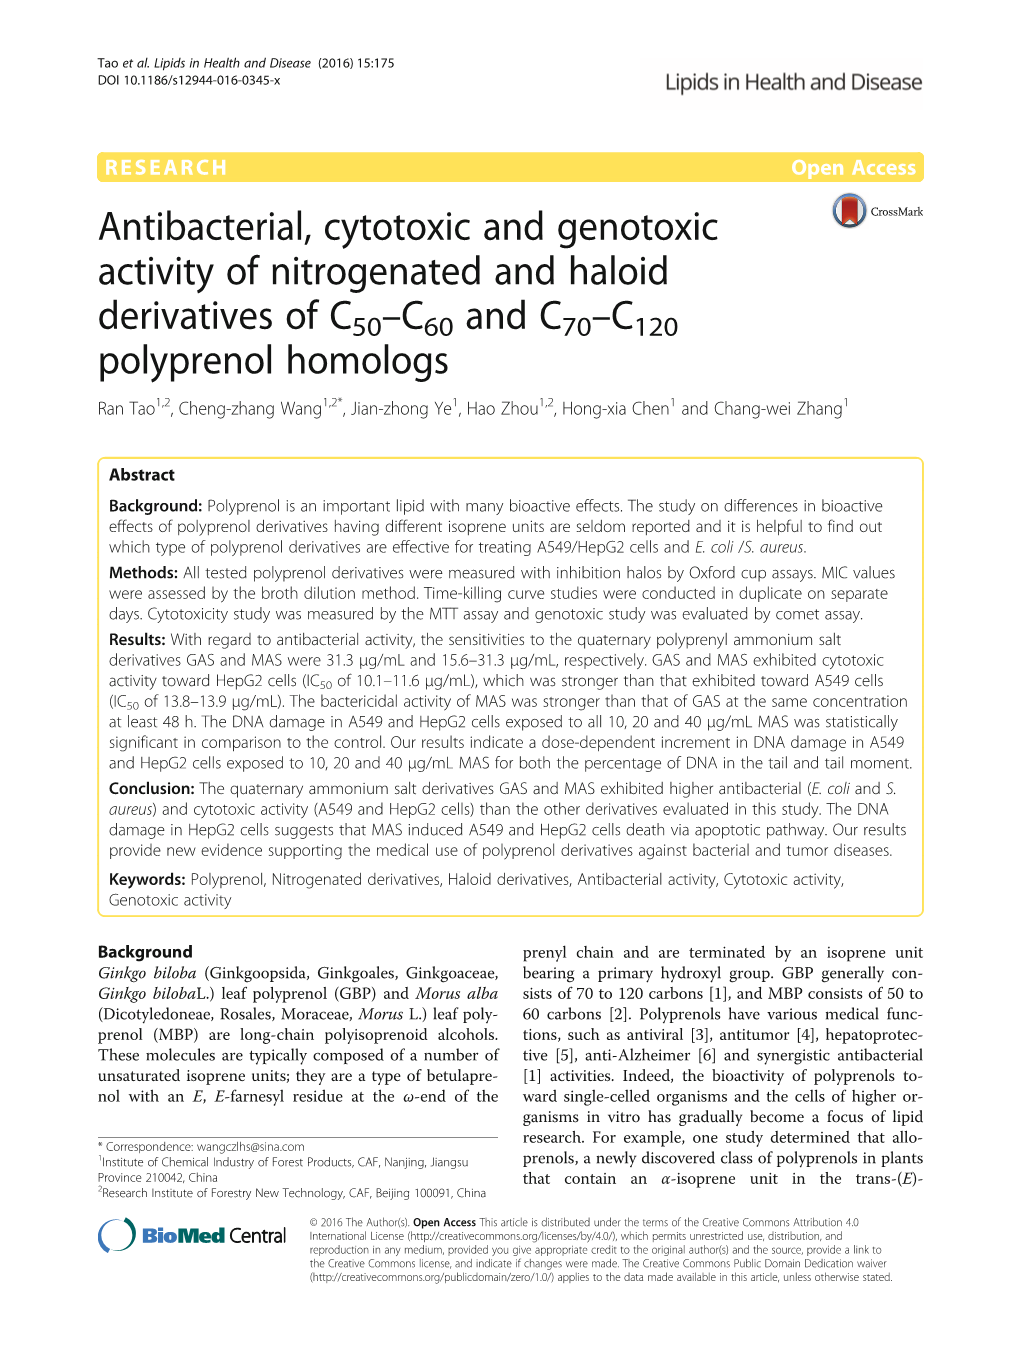 Antibacterial, Cytotoxic and Genotoxic Activity of Nitrogenated and Haloid